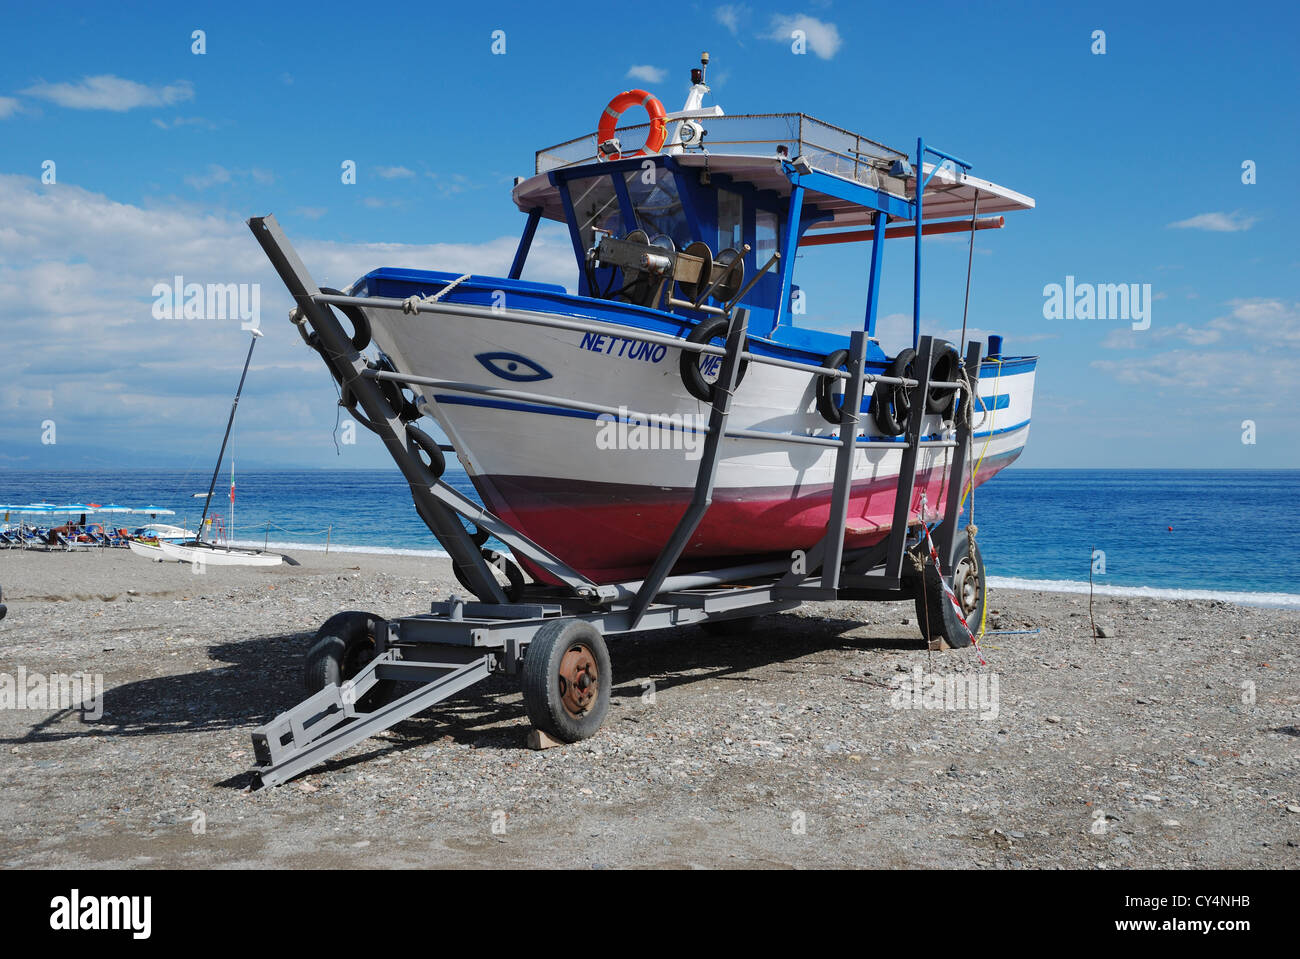 A fishing boat on the beach at Letojanni, Sicily, Italy. Stock Photo